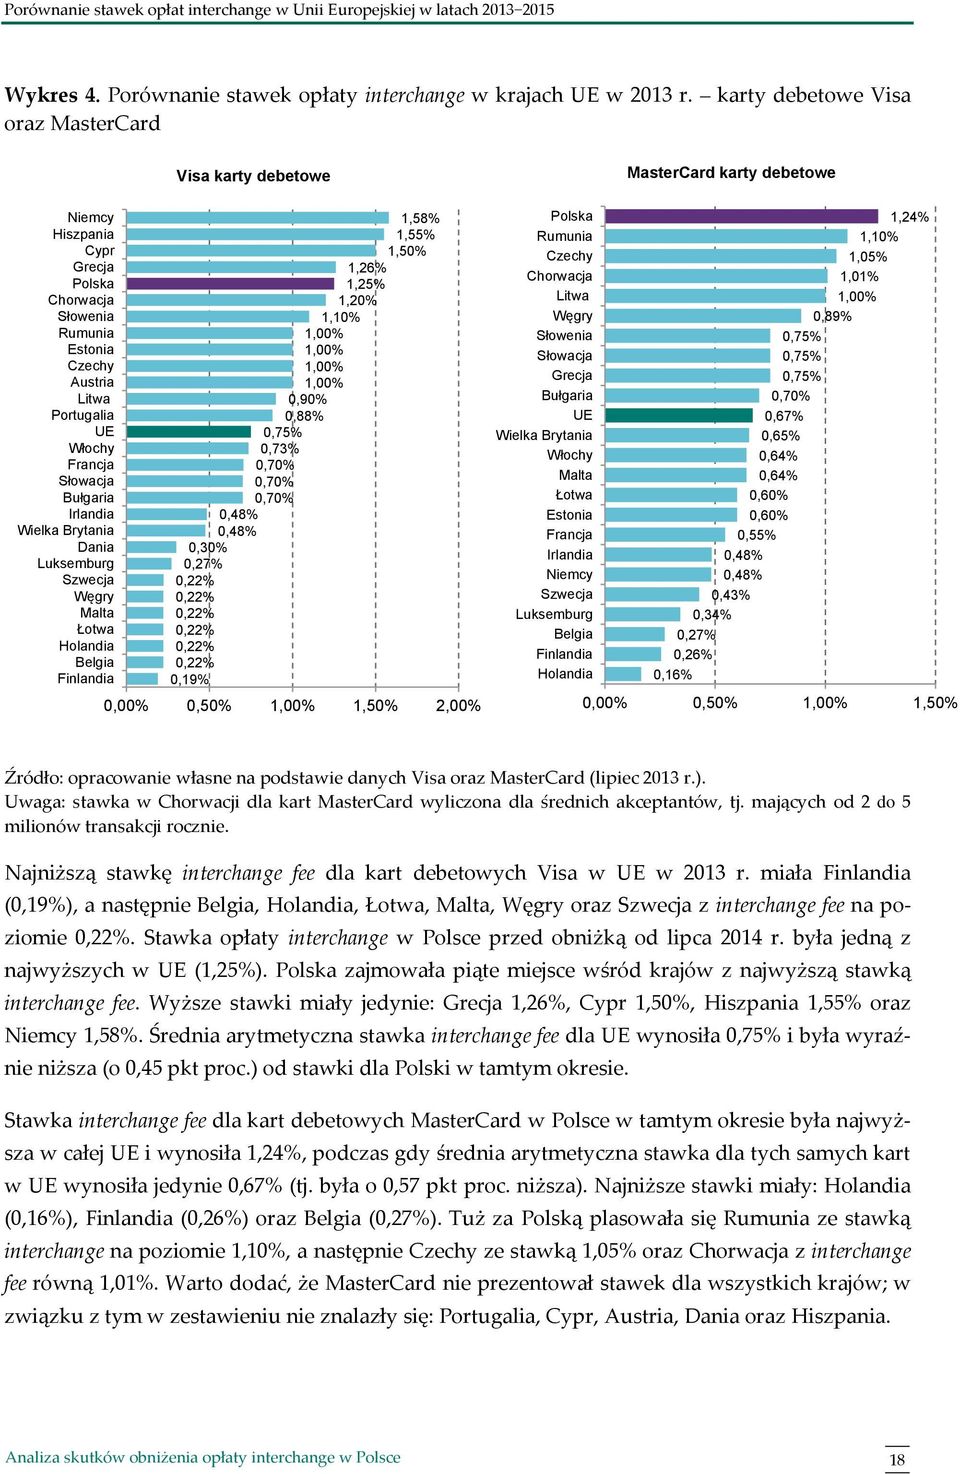 Dania Luksemburg Szwecja Węgry Malta Łotwa Holandia Belgia Finlandia Visa karty debetowe 1,58% 1,55% 1,50% 1,26% 1,25% 1,20% 1,10% 0,90% 0,88% 0,75% 0,73% 0,70% 0,70% 0,70% 0,48% 0,48% 0,30% 0,27%